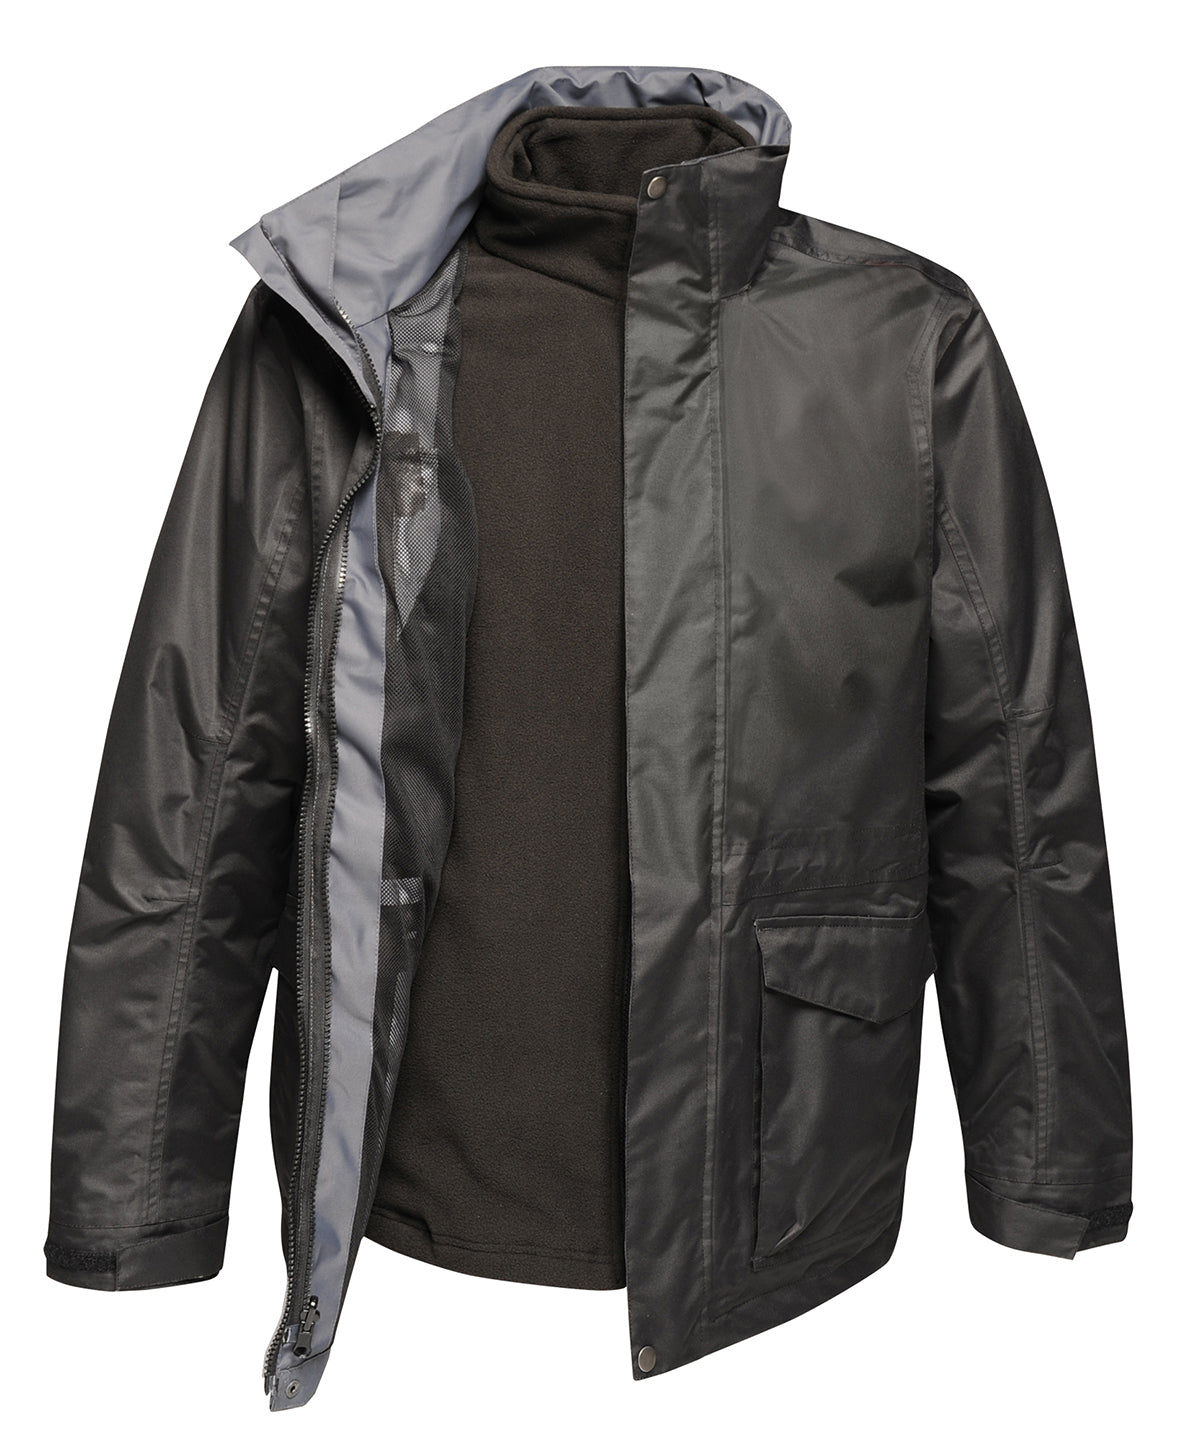 Regatta Benson III 3-in-1 jacket